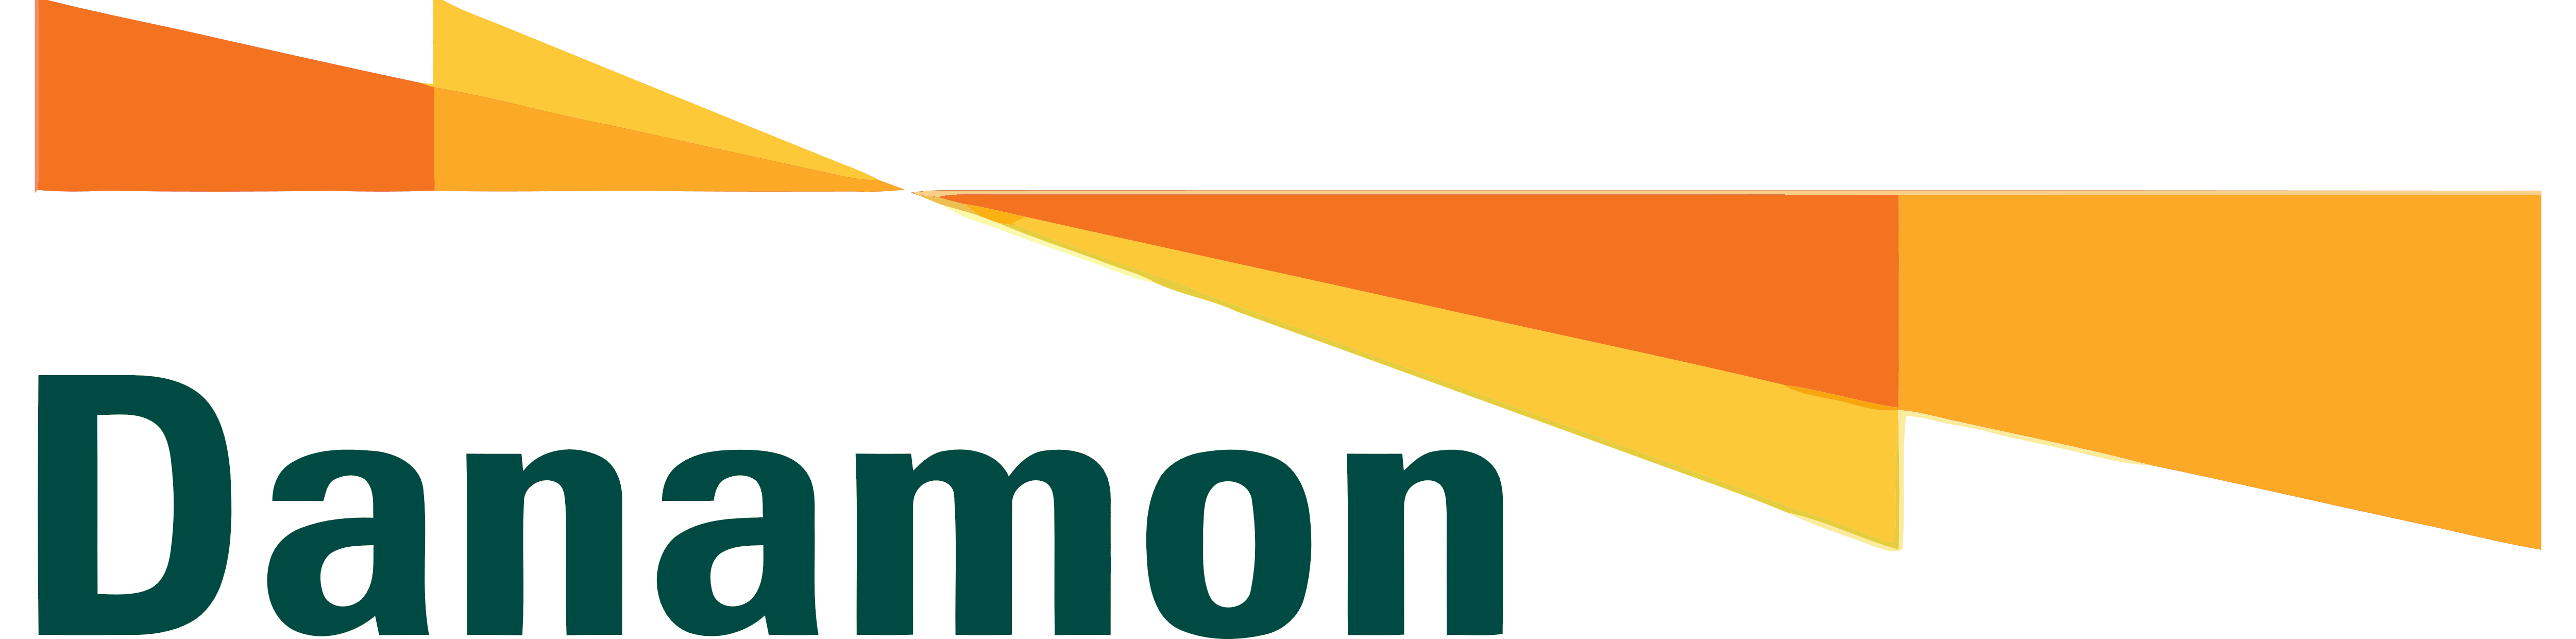 Bank Danamon â€“ Logos Download